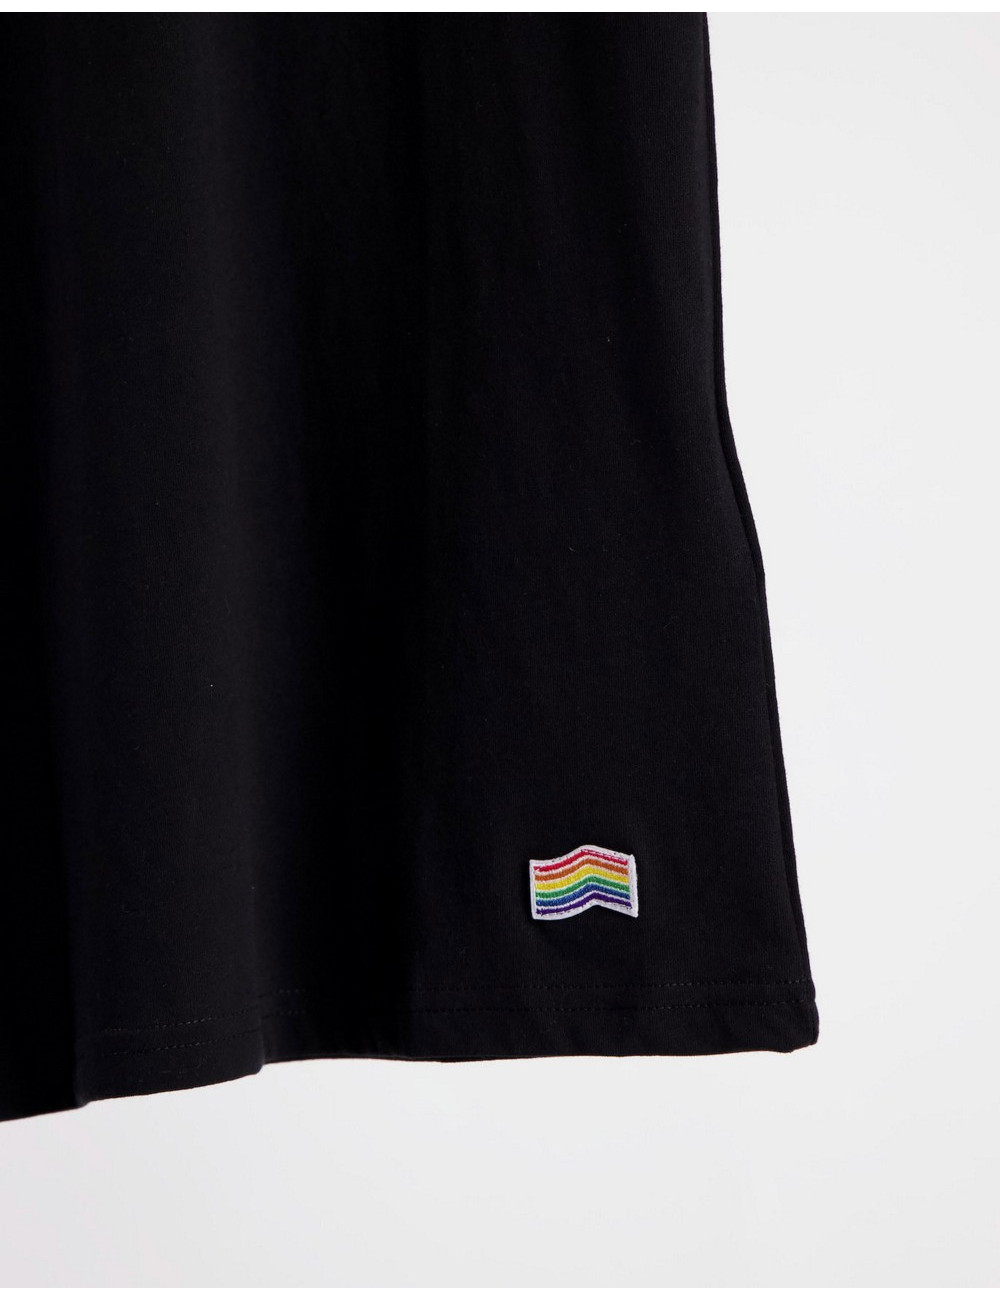 Vans Rainbow t-shirt in black